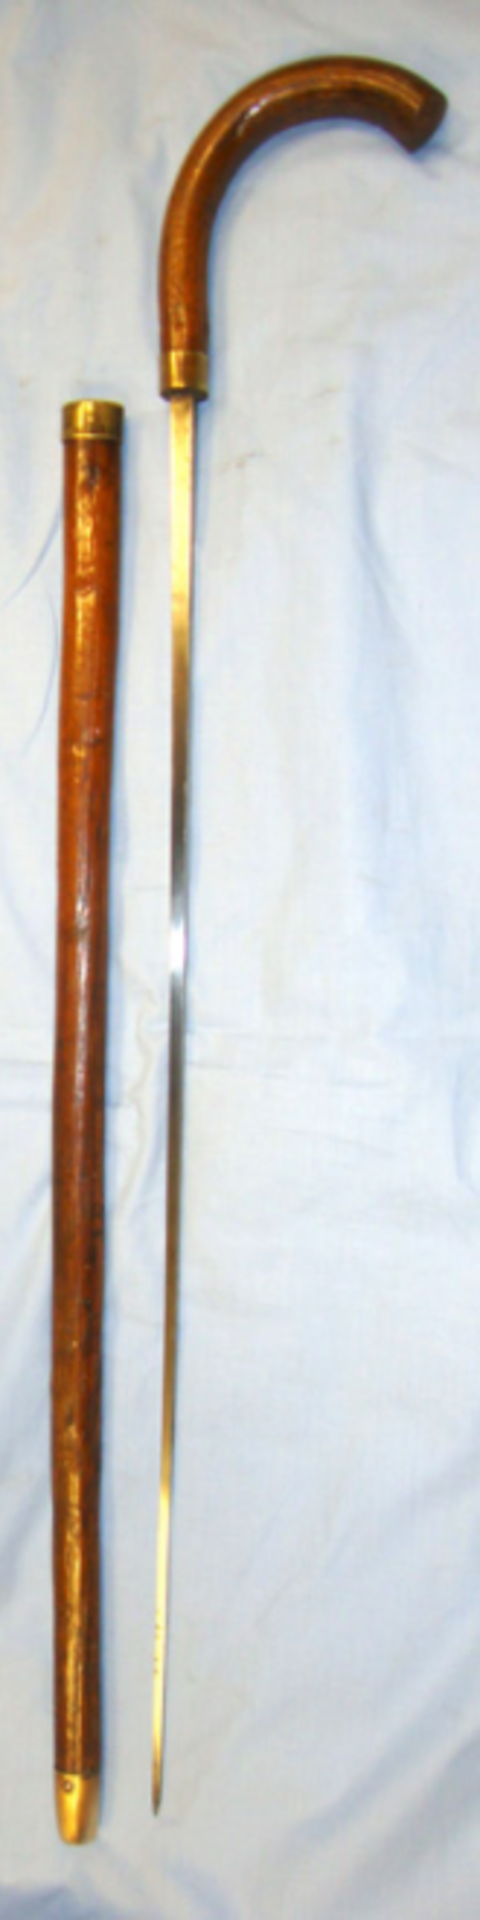 Victorian Customs Officer's Hawthorne Sword Stick By Mole Birmingham.